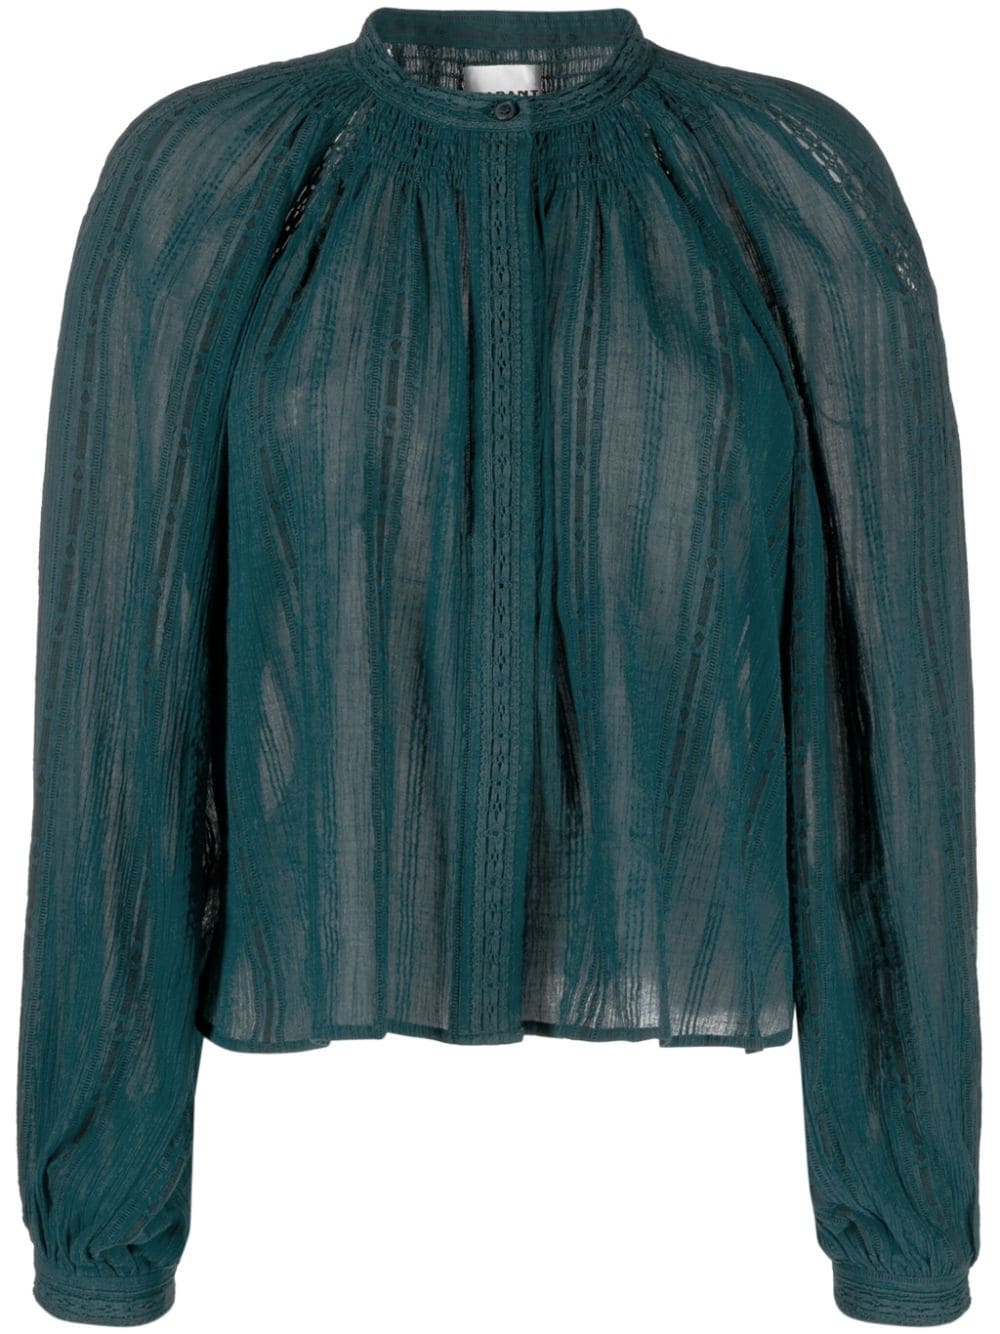 MARANT ÉTOILE Bluse mit rundem Ausschnitt - Grün von MARANT ÉTOILE